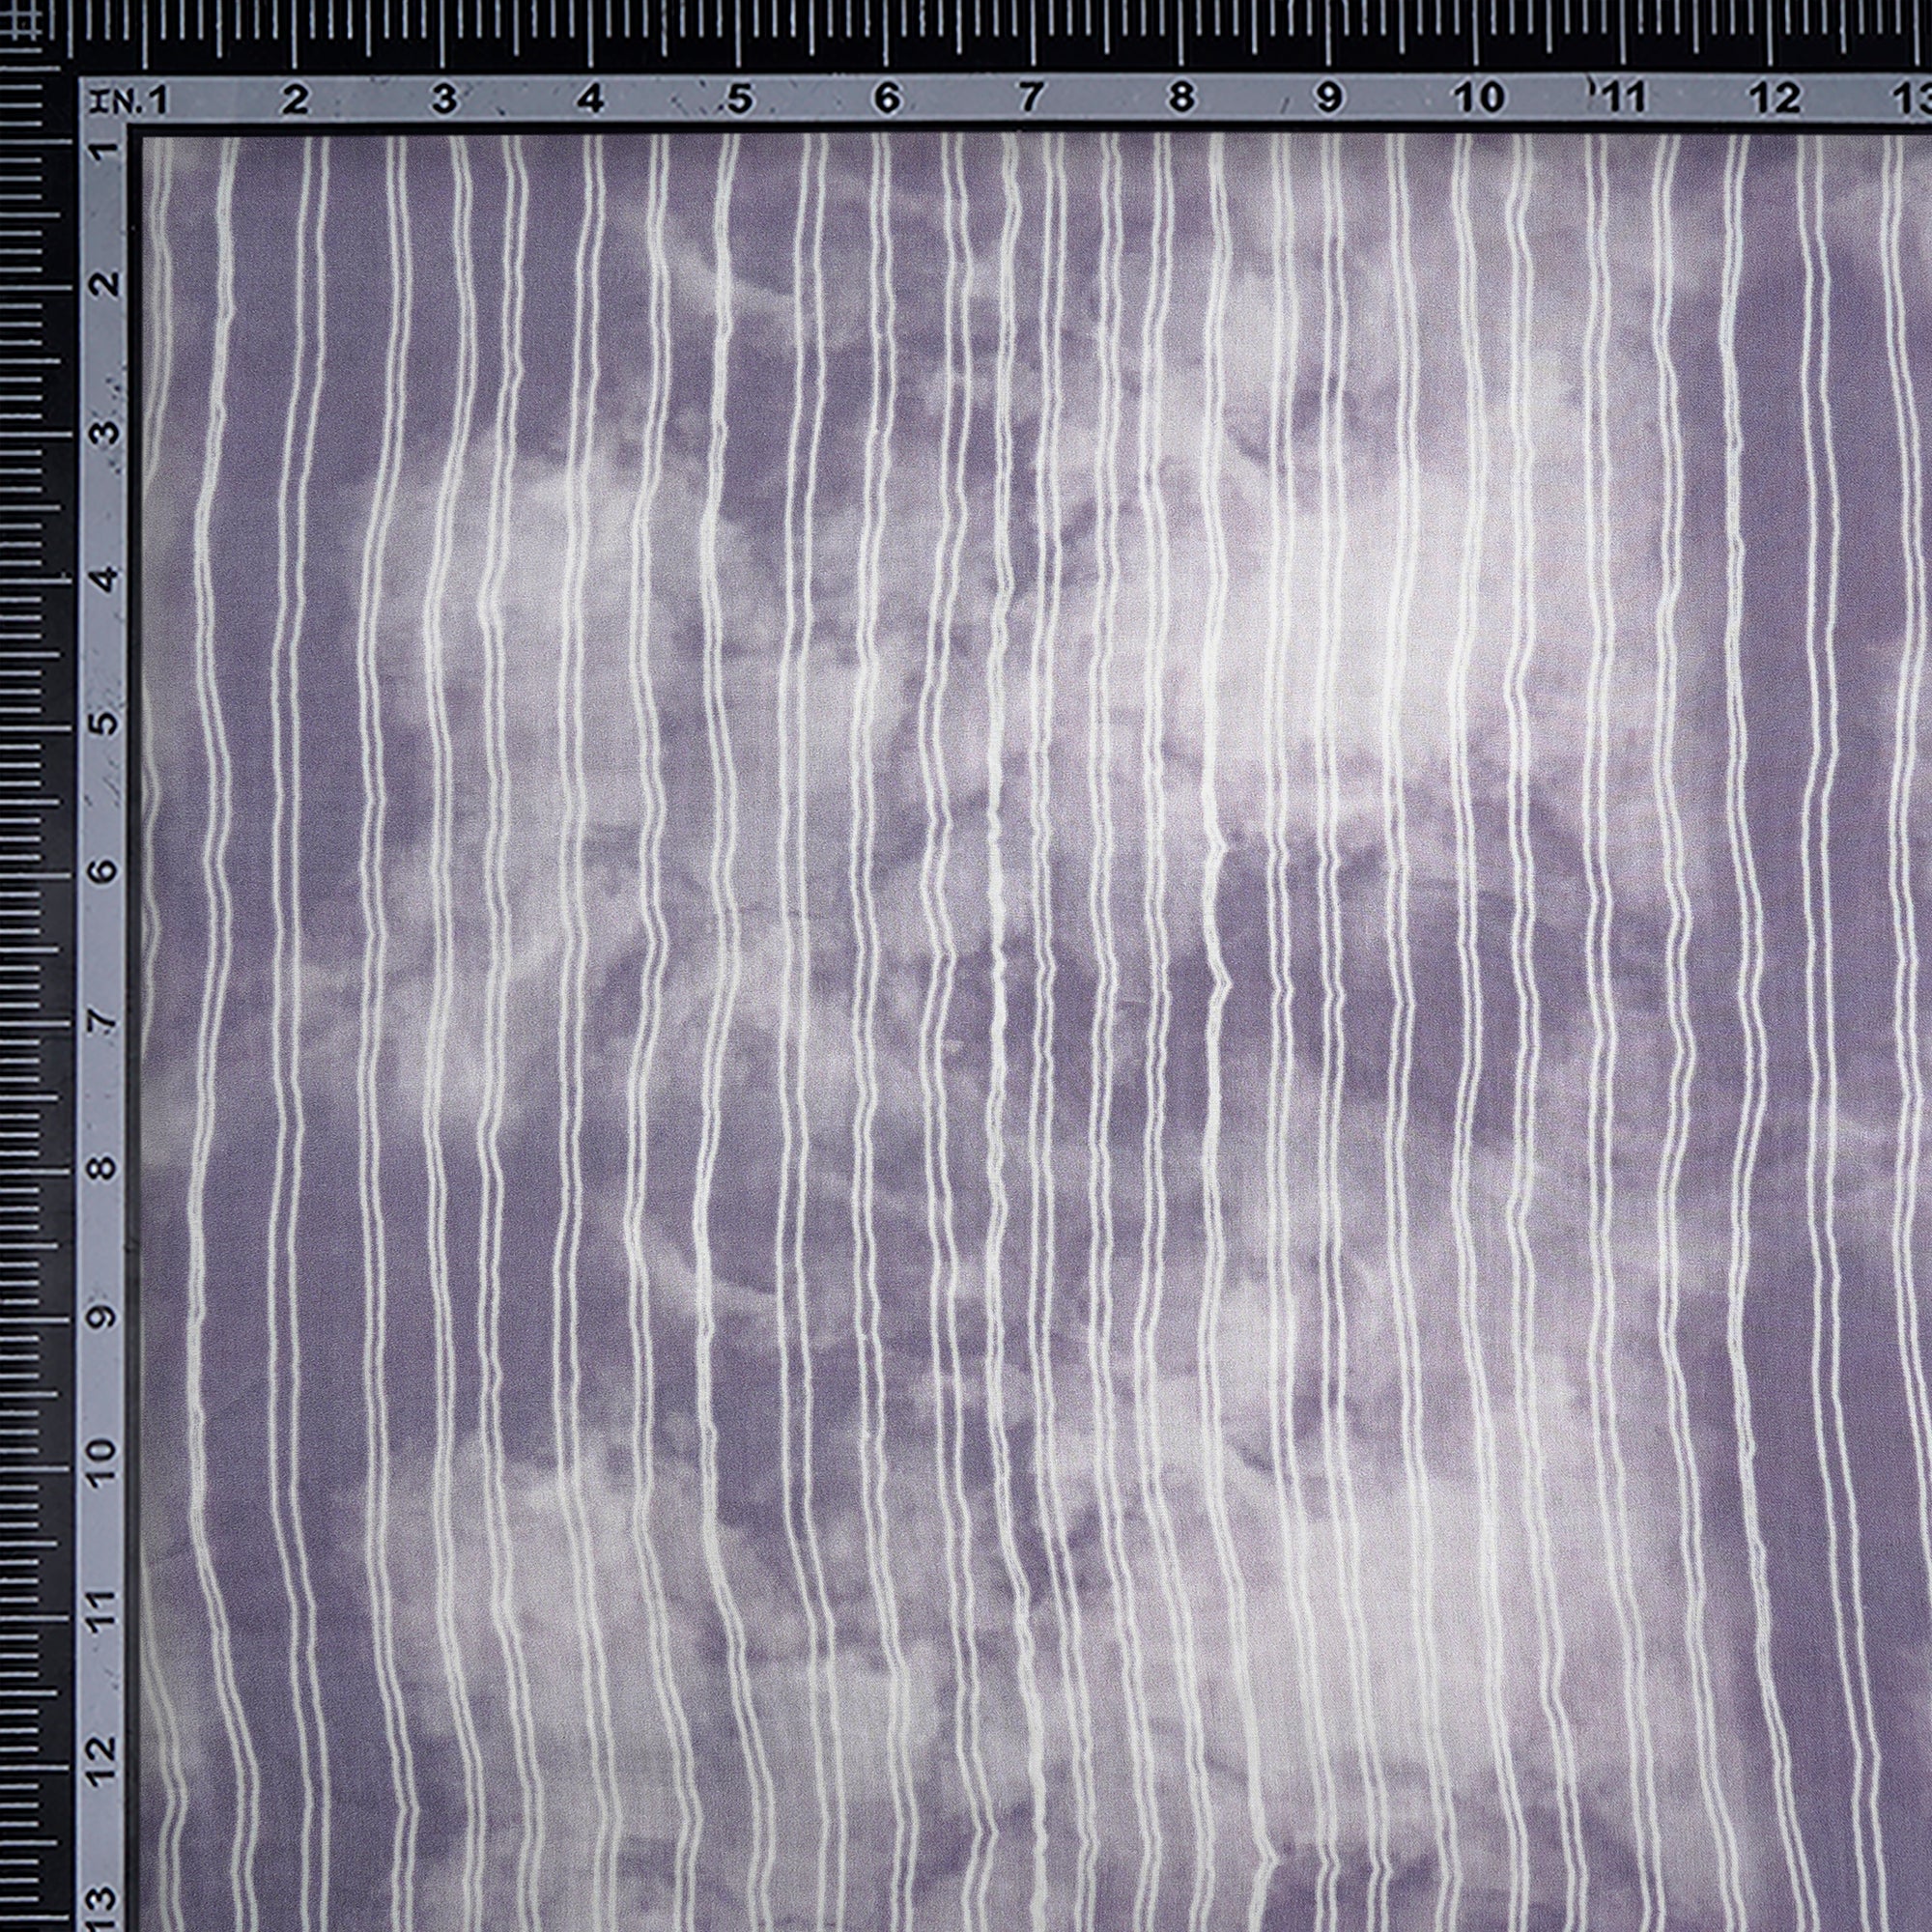 Purple Heather Stripe Pattern Digital Print Modal Fabric